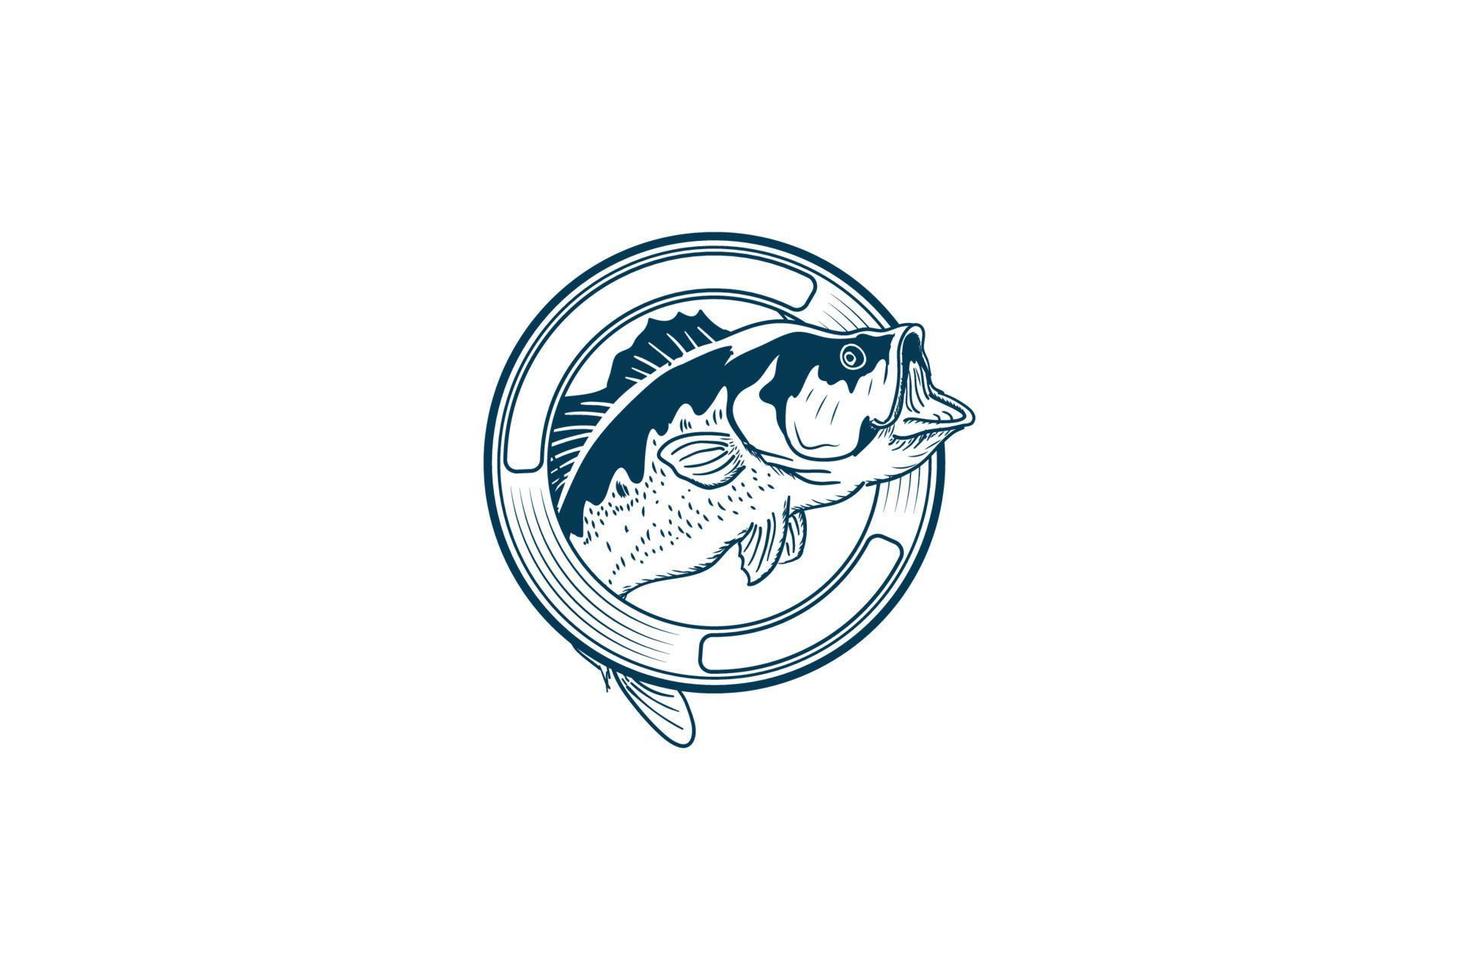 Etiqueta de emblema de insignia de pescado de boca grande de bajo redondo circular para vector de diseño de logotipo de club de pescadores